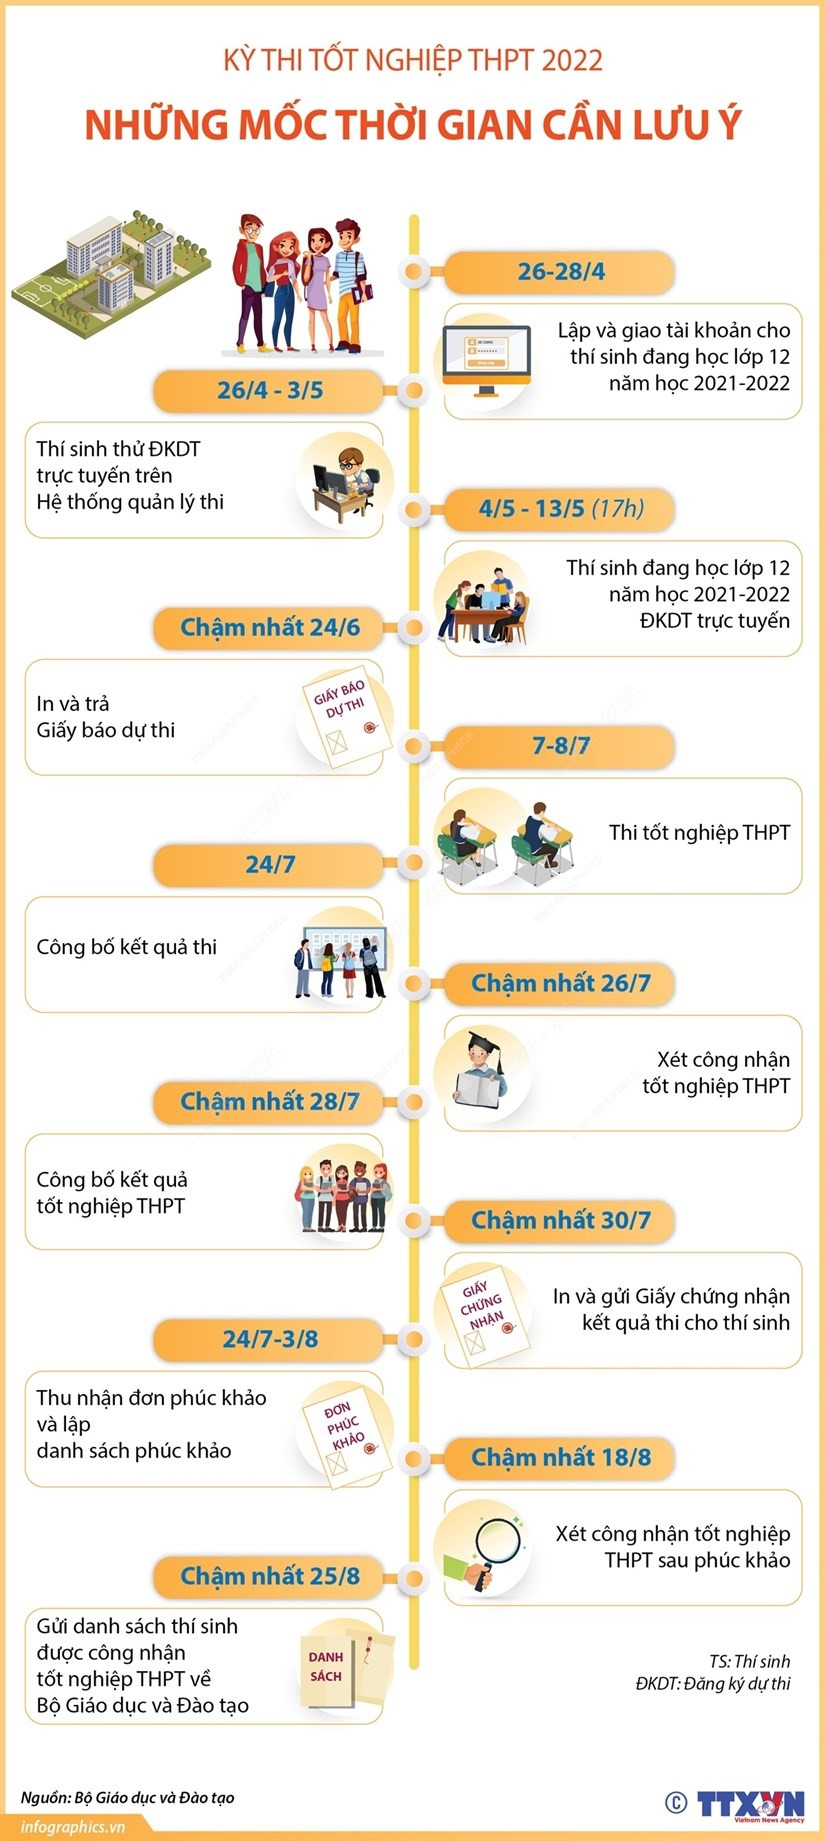 [Infographics] Ky thi tot nghiep THPT: Nhung moc thoi gian can luu y hinh anh 1